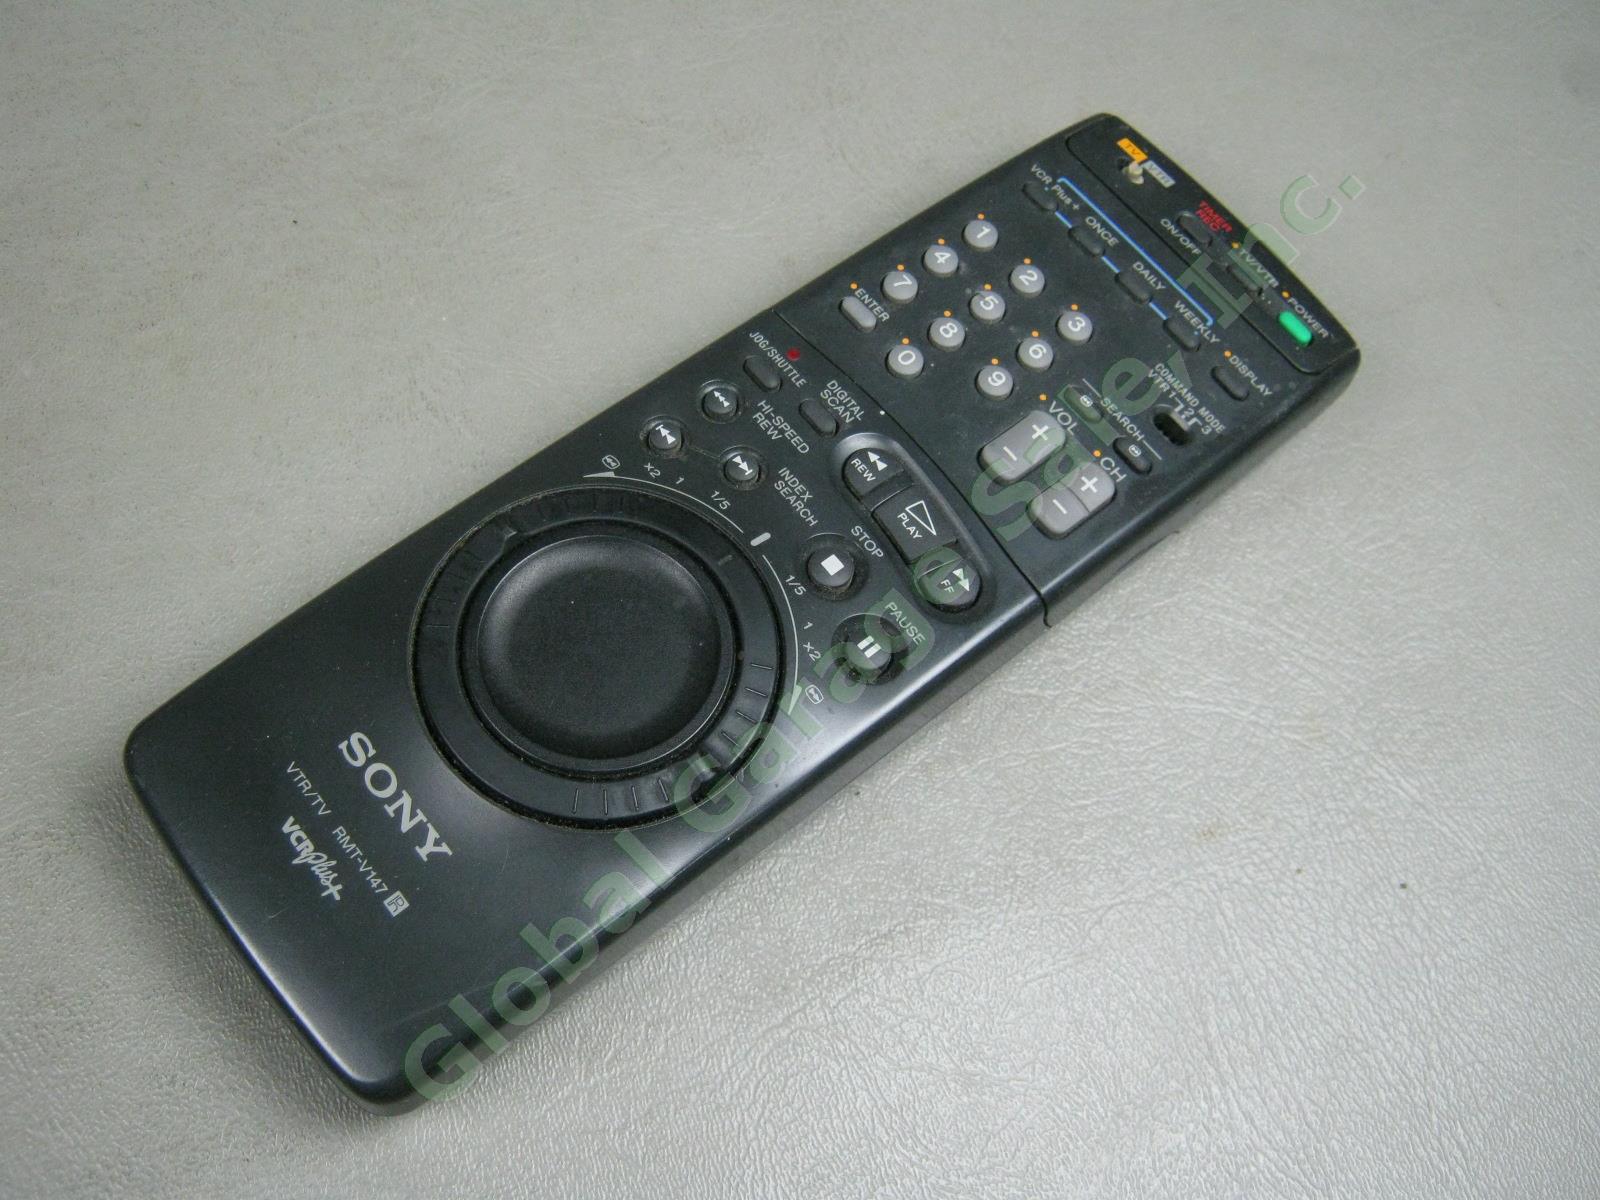 Sony EV-S7000 Hi8 8mm Digital HiFi Editing VCR Player Recorder +Remote Bundle NR 7